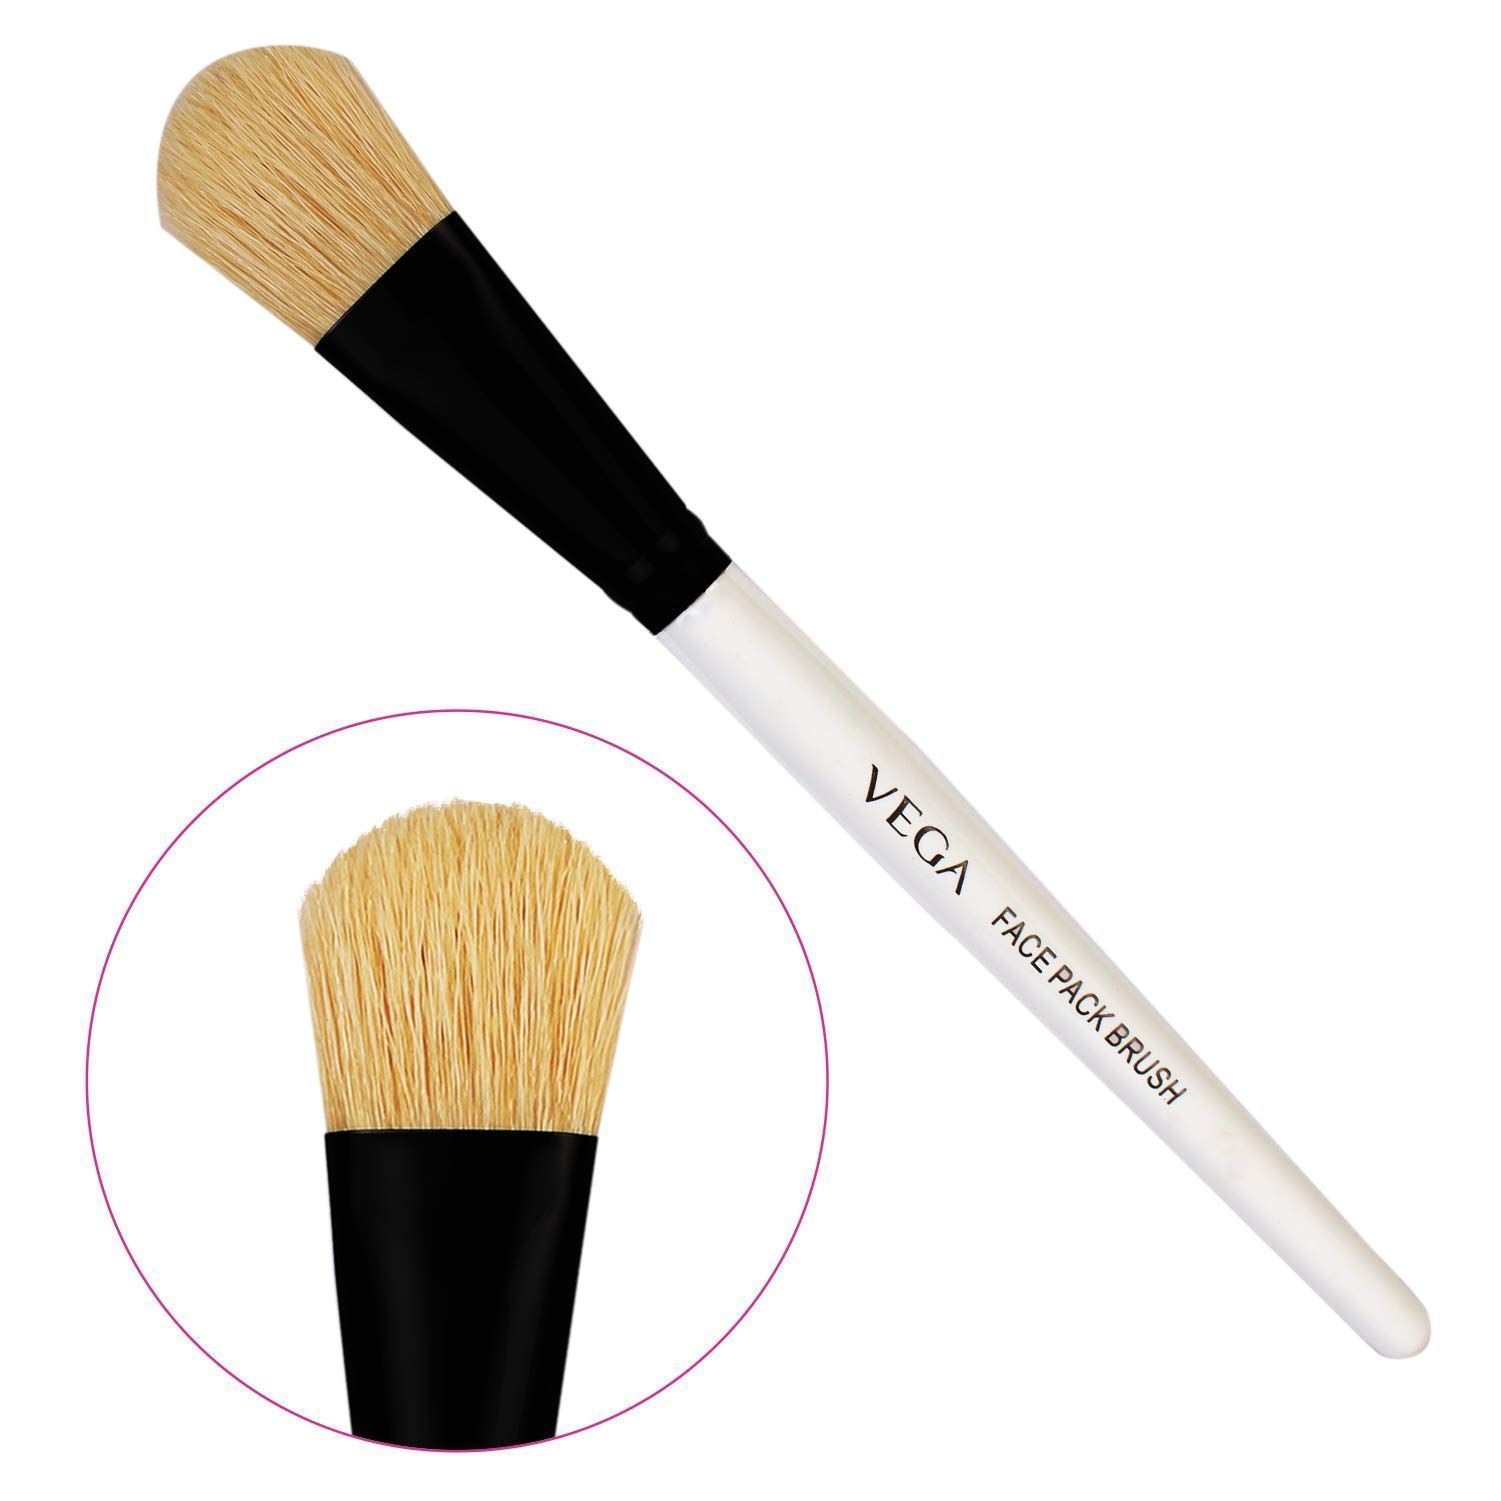 VEGA Less Absorbent Bristles Facial Pack Makeup Brush and Facial Band Combo - White, 1 Piece, VCP-03